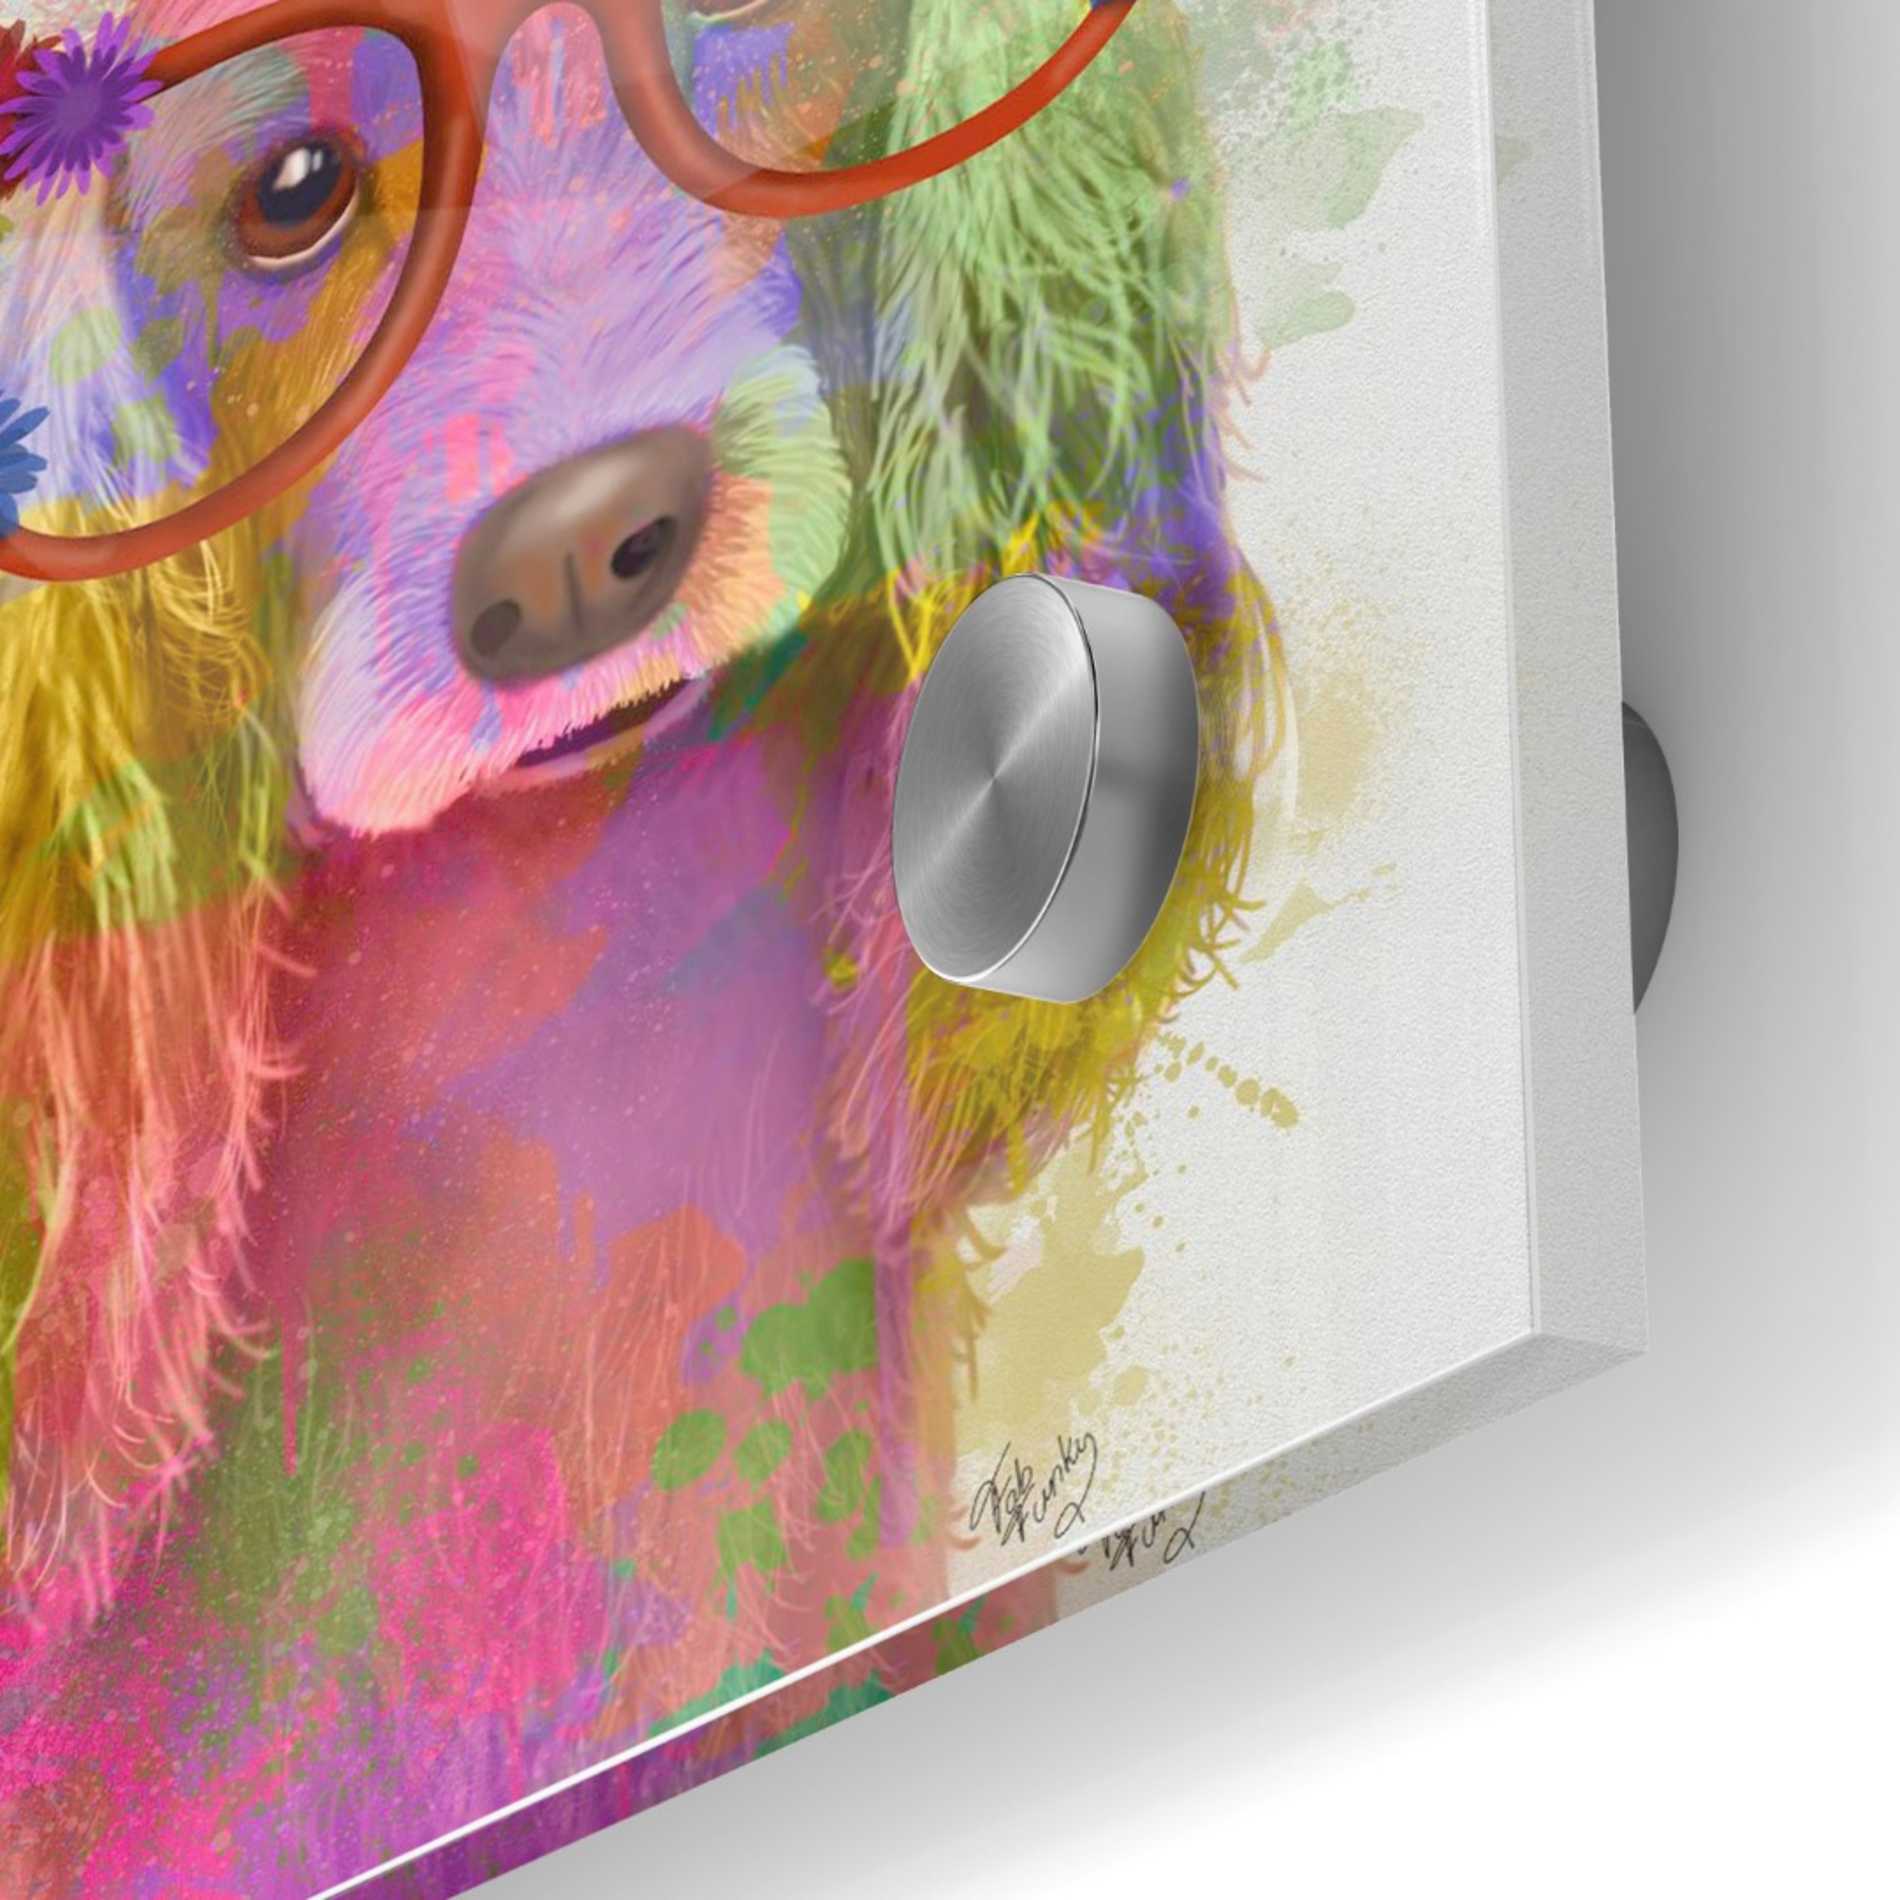 Epic Art 'Rainbow Splash Cocker Spaniel, Portrait' by Fab Funky Acrylic Glass Wall Art,24x24